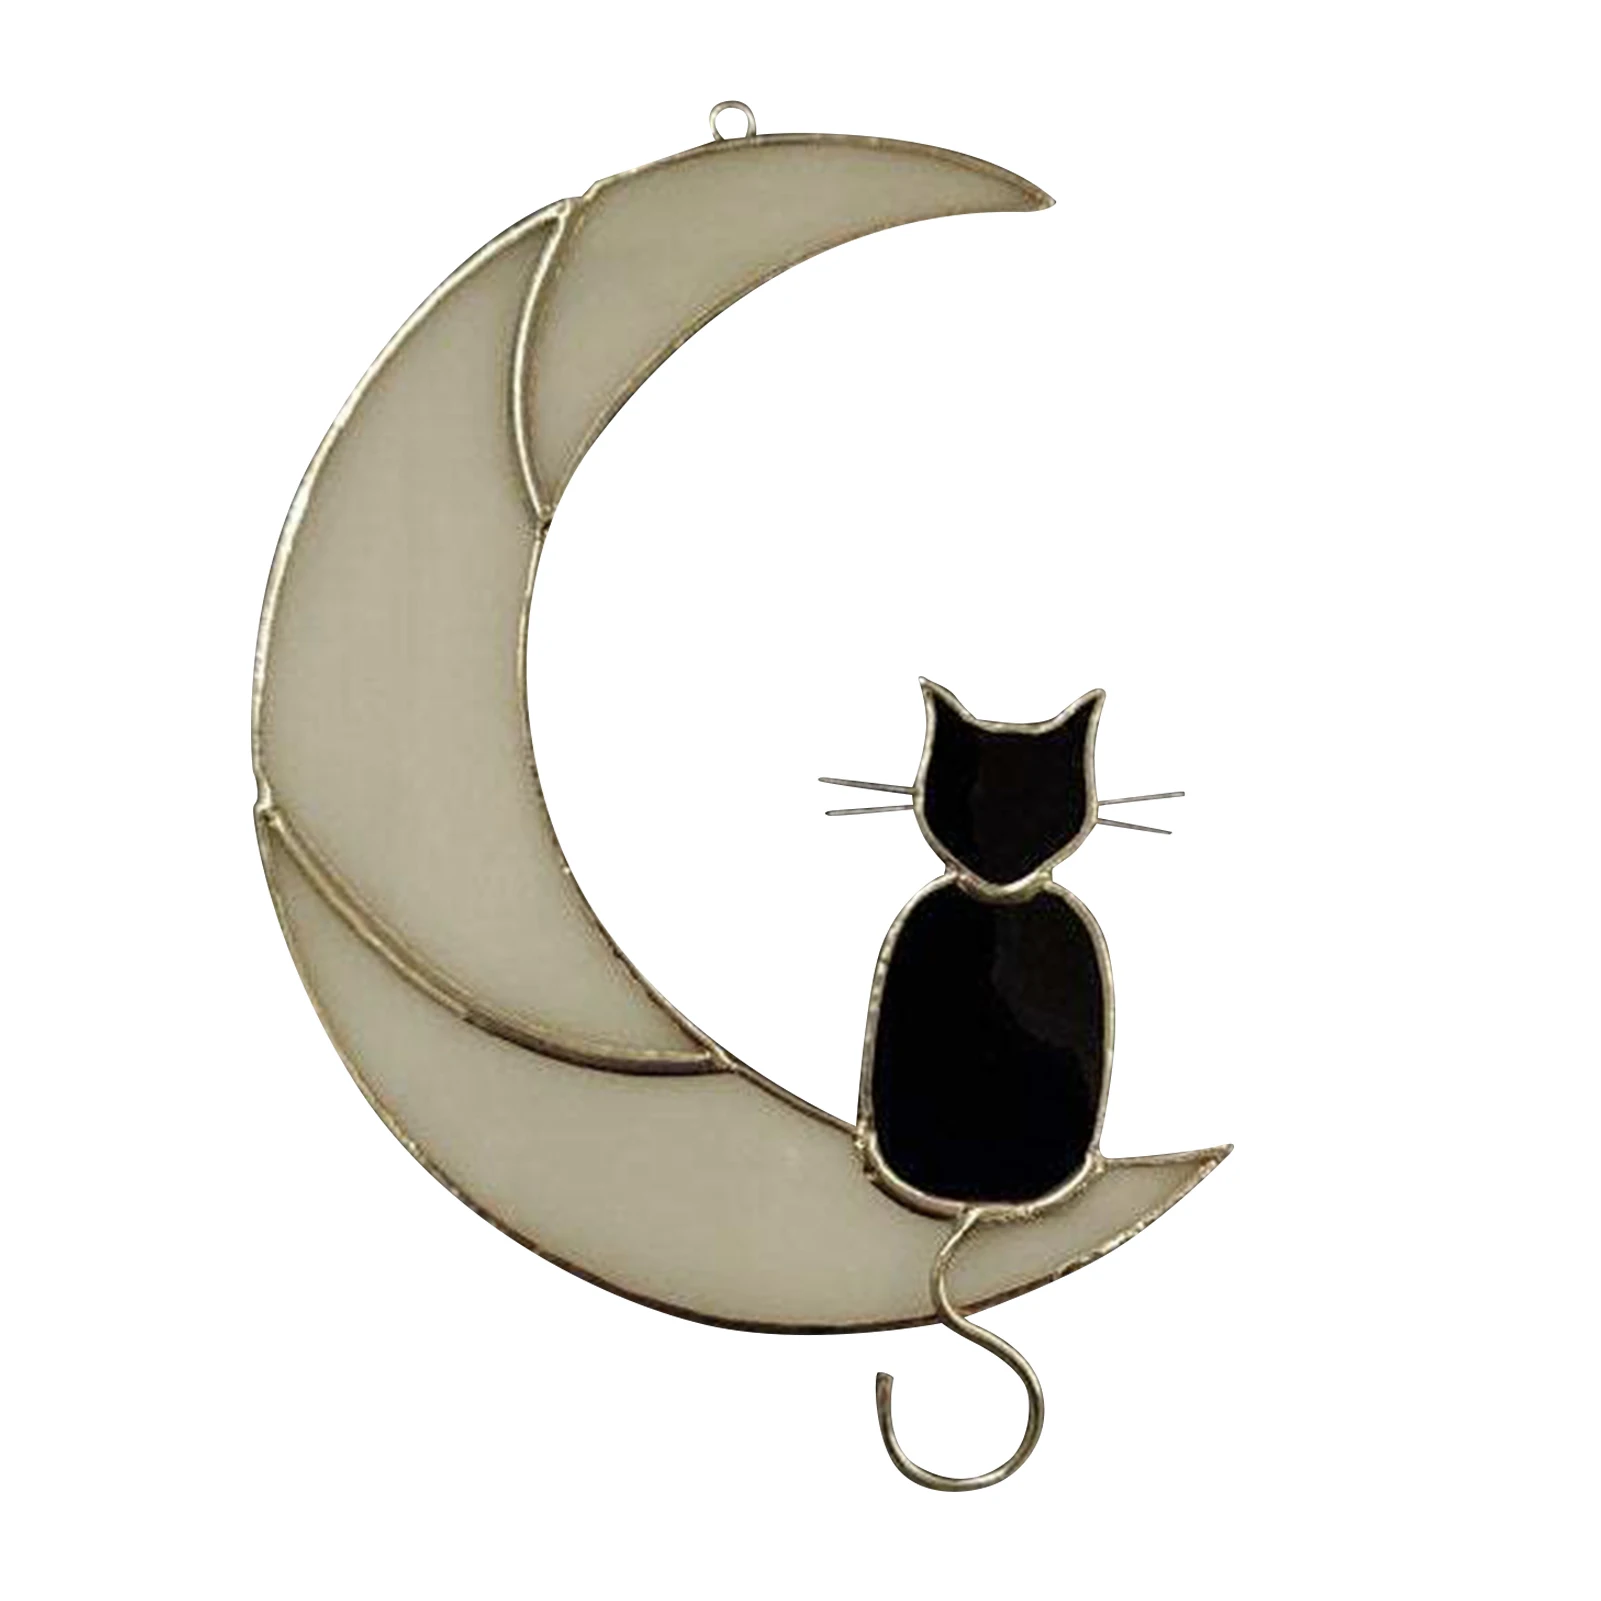 Stained Glass Cat Suncatcher Cat Lover Gift Pet Gift Black Cat On the Moon Home Decor Home Ornament iScooter Stained Glass Cat On the Moon Window Hanging Suncatcher 